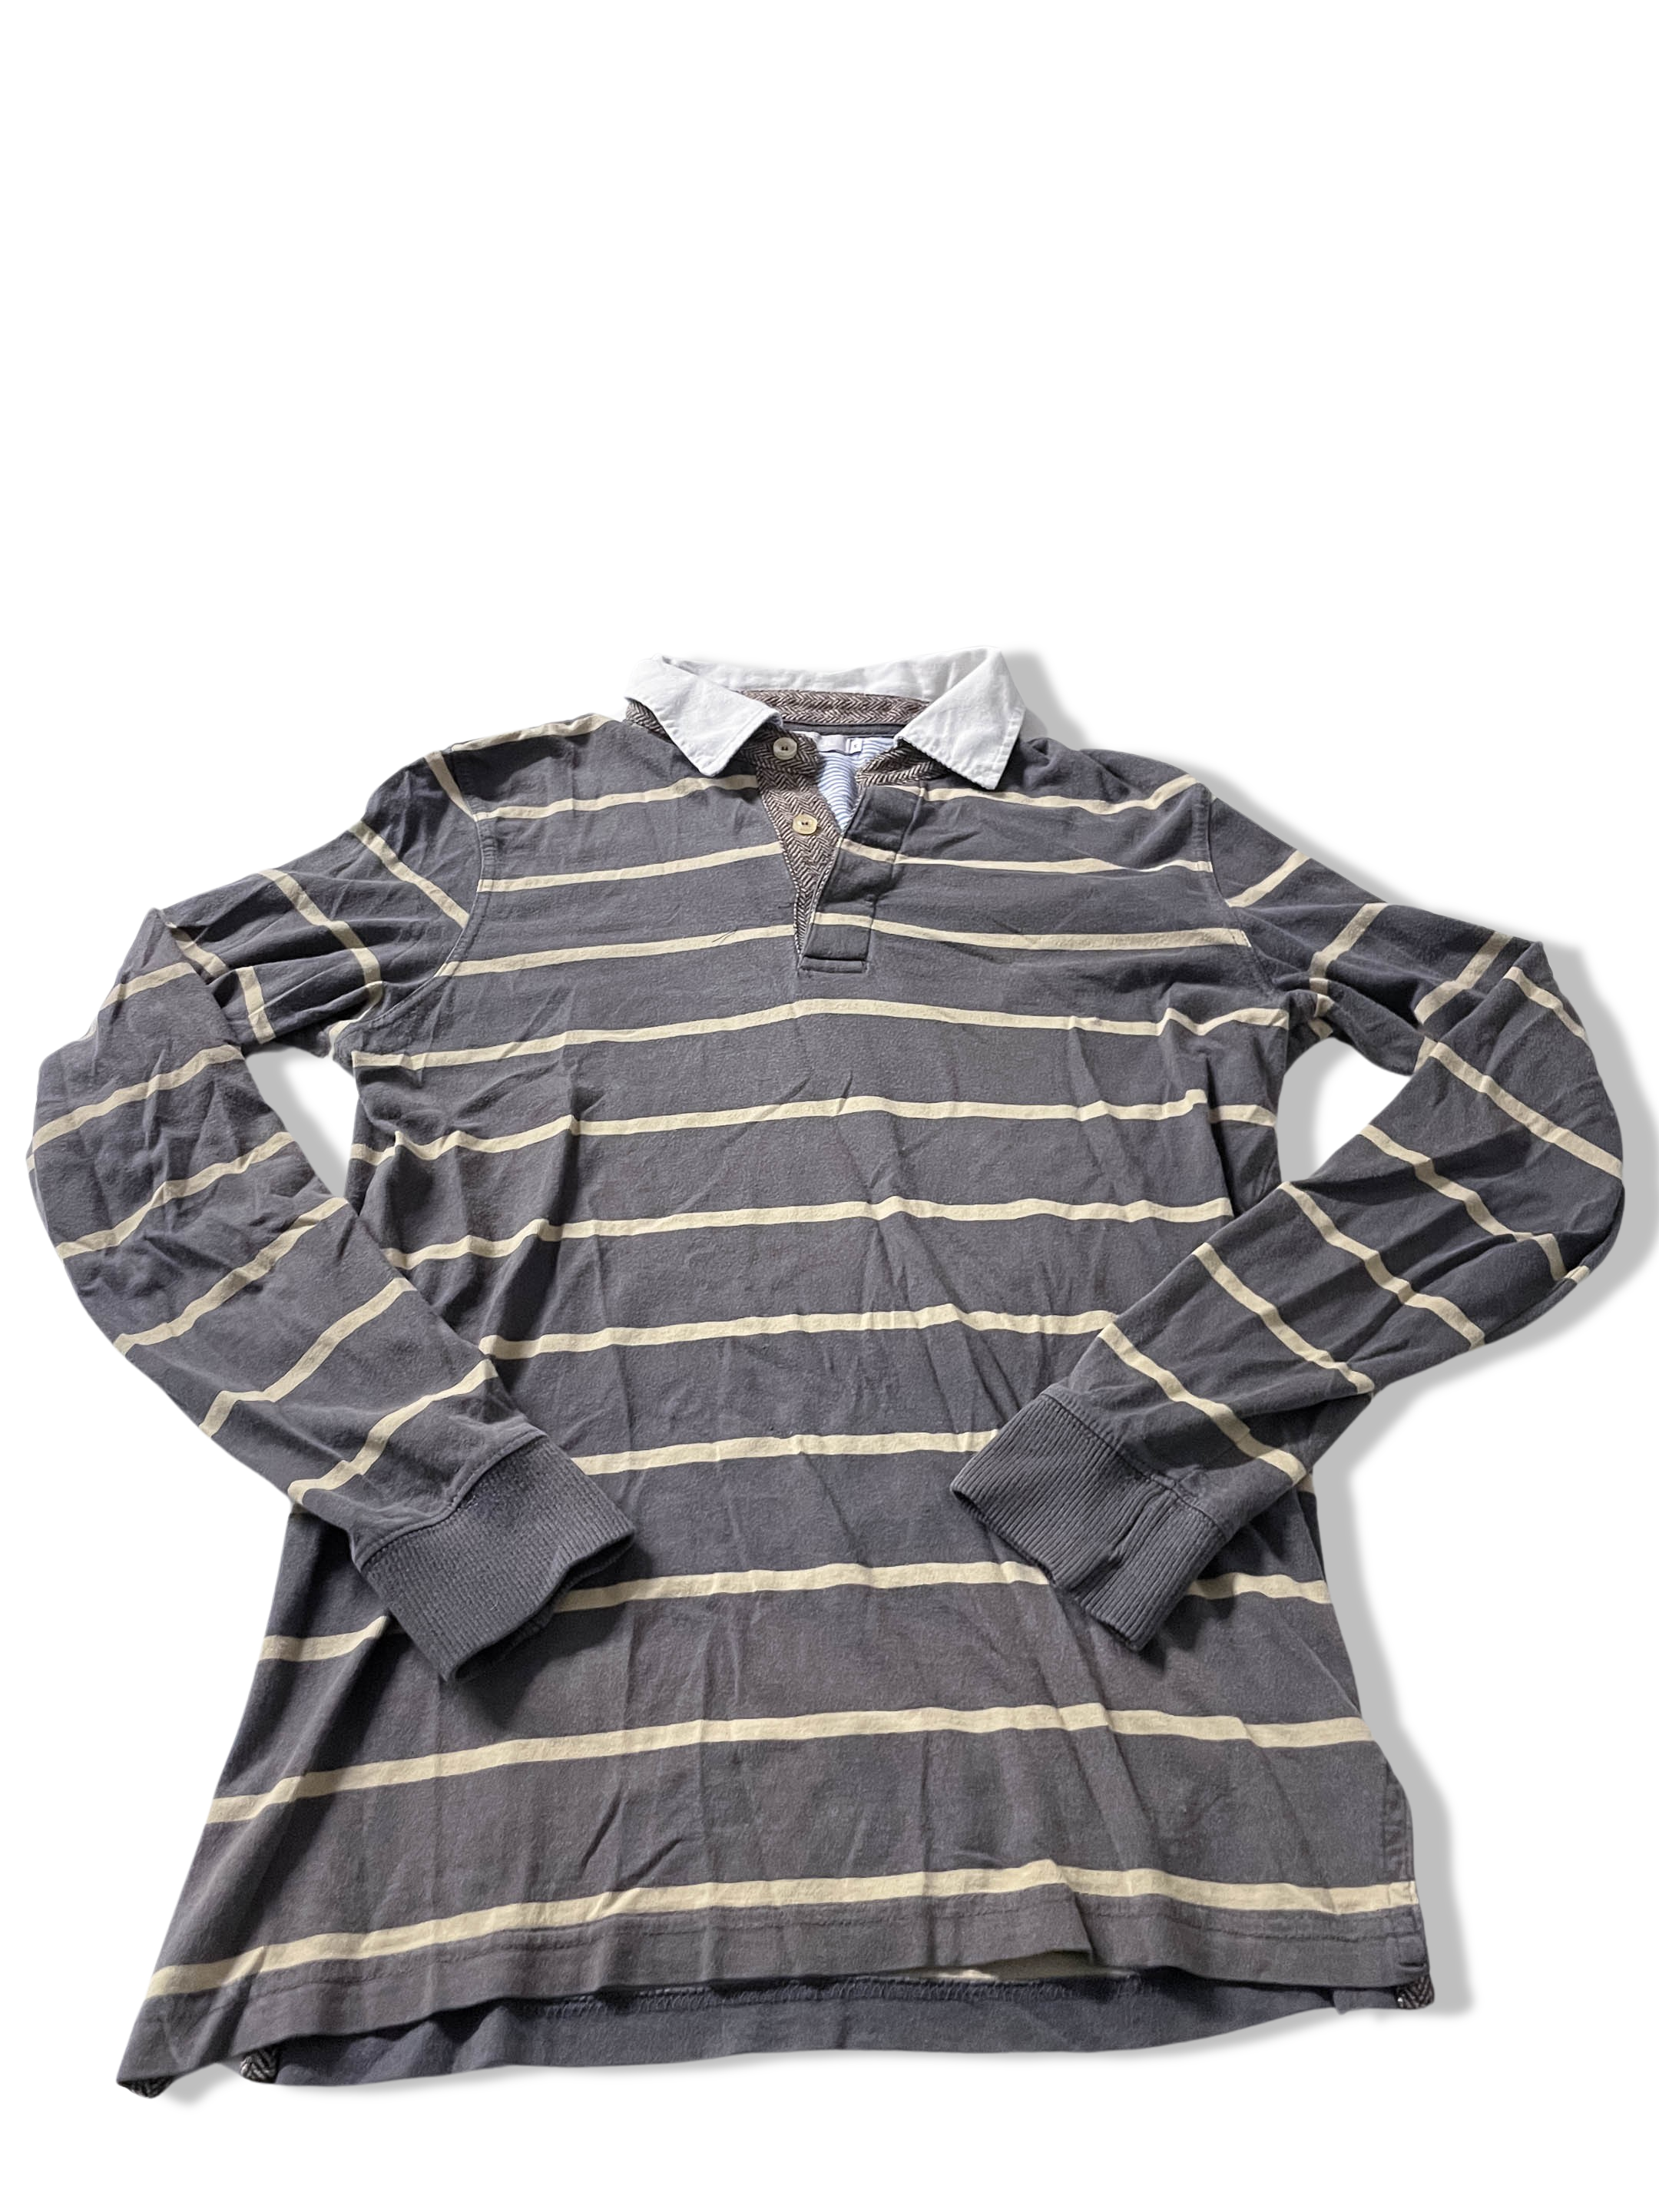 Vintage Joyful grey stripped mens medium long sleeve polo shirt